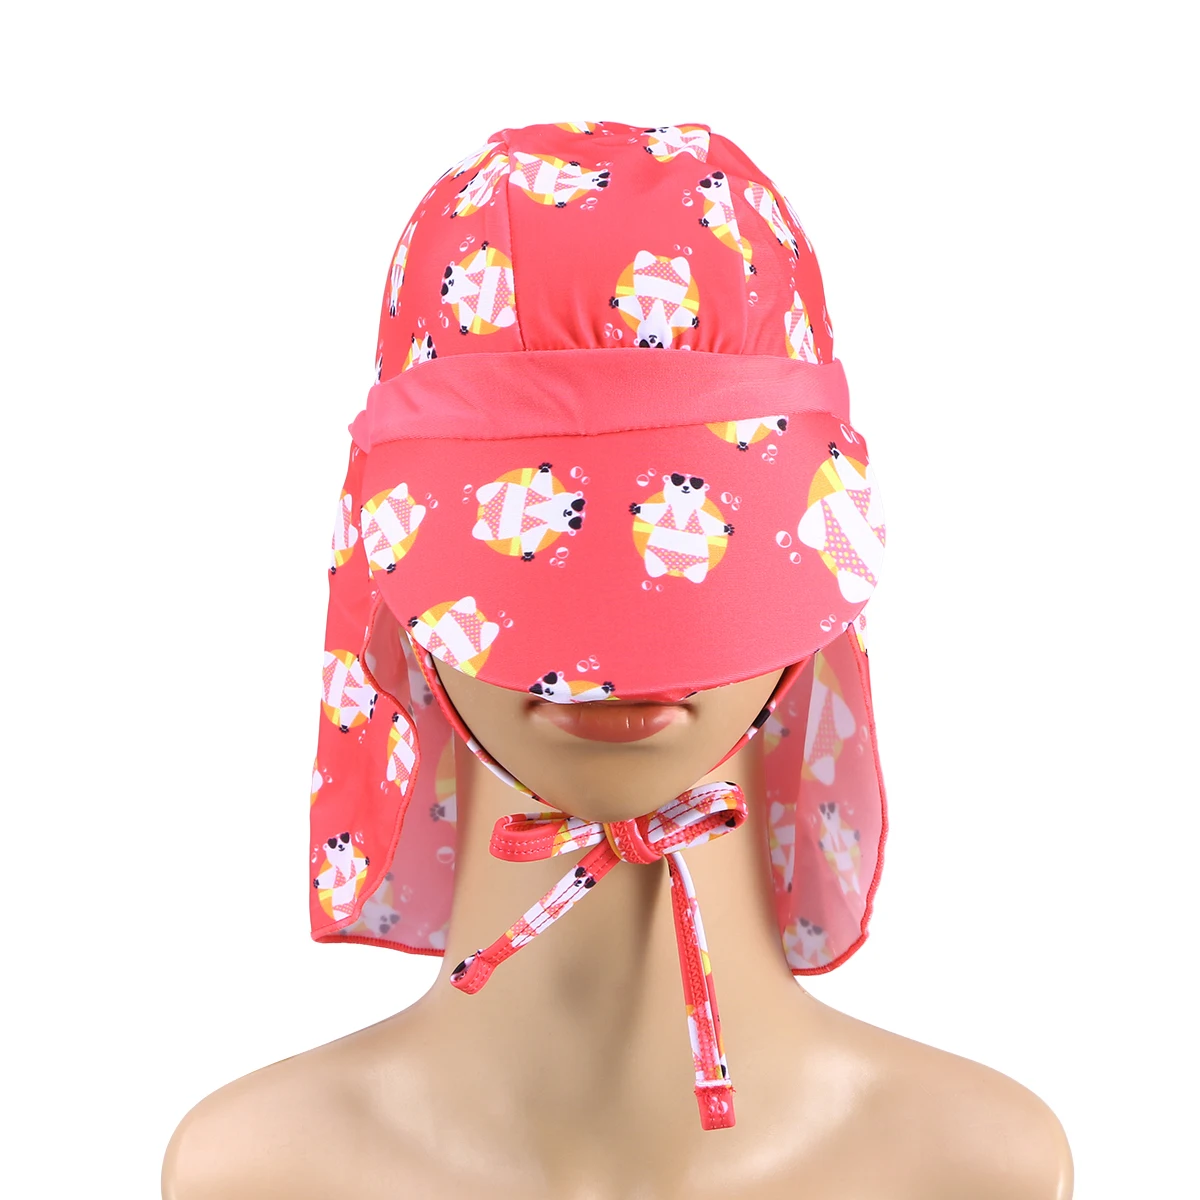 Защита от солнца защита шапочка для бассейна защита ушей шеи пляжная шапочка для бассейна ушанка Солнцезащитная шляпа для детей